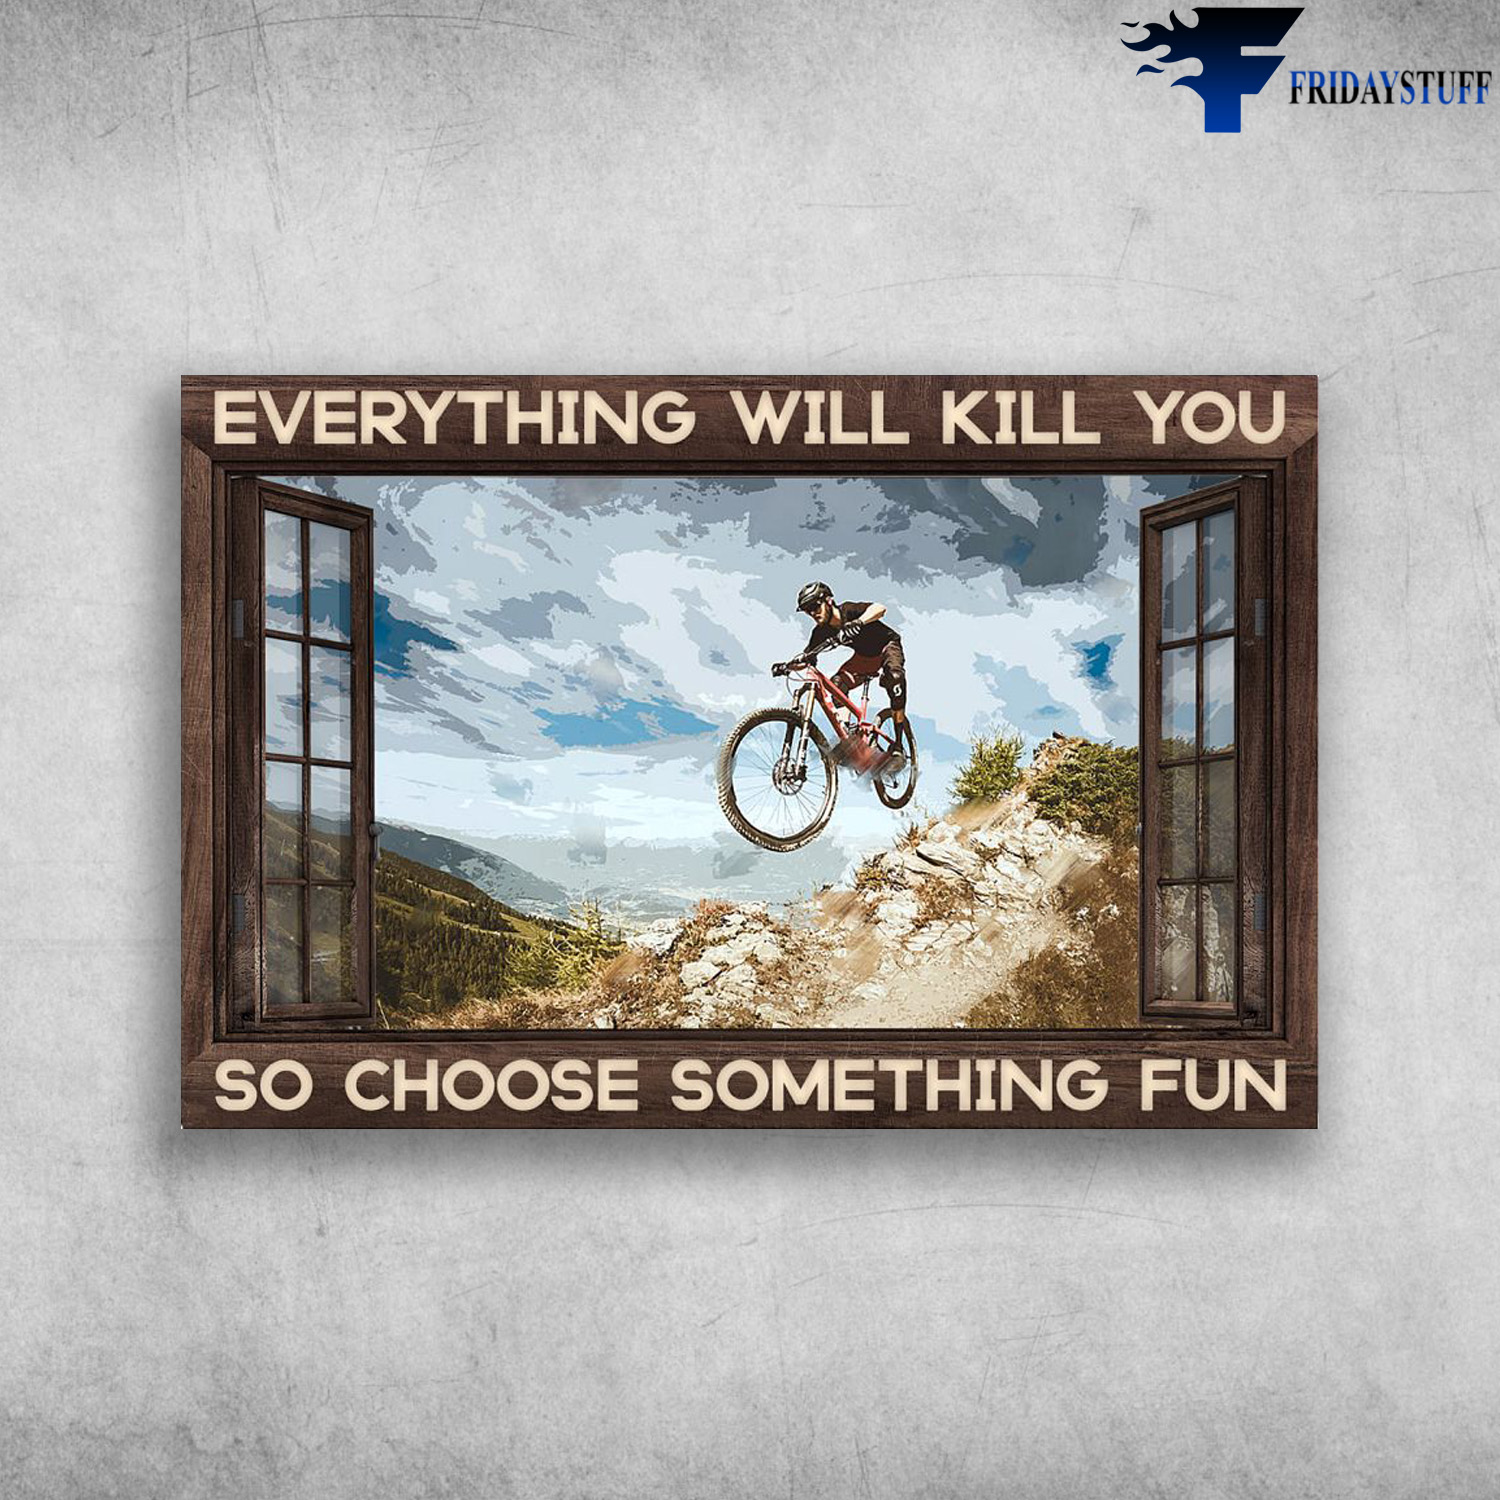 Man Riding Mountain Bike Outside The Window - Everything Will Kill You, So Choose Something Fun